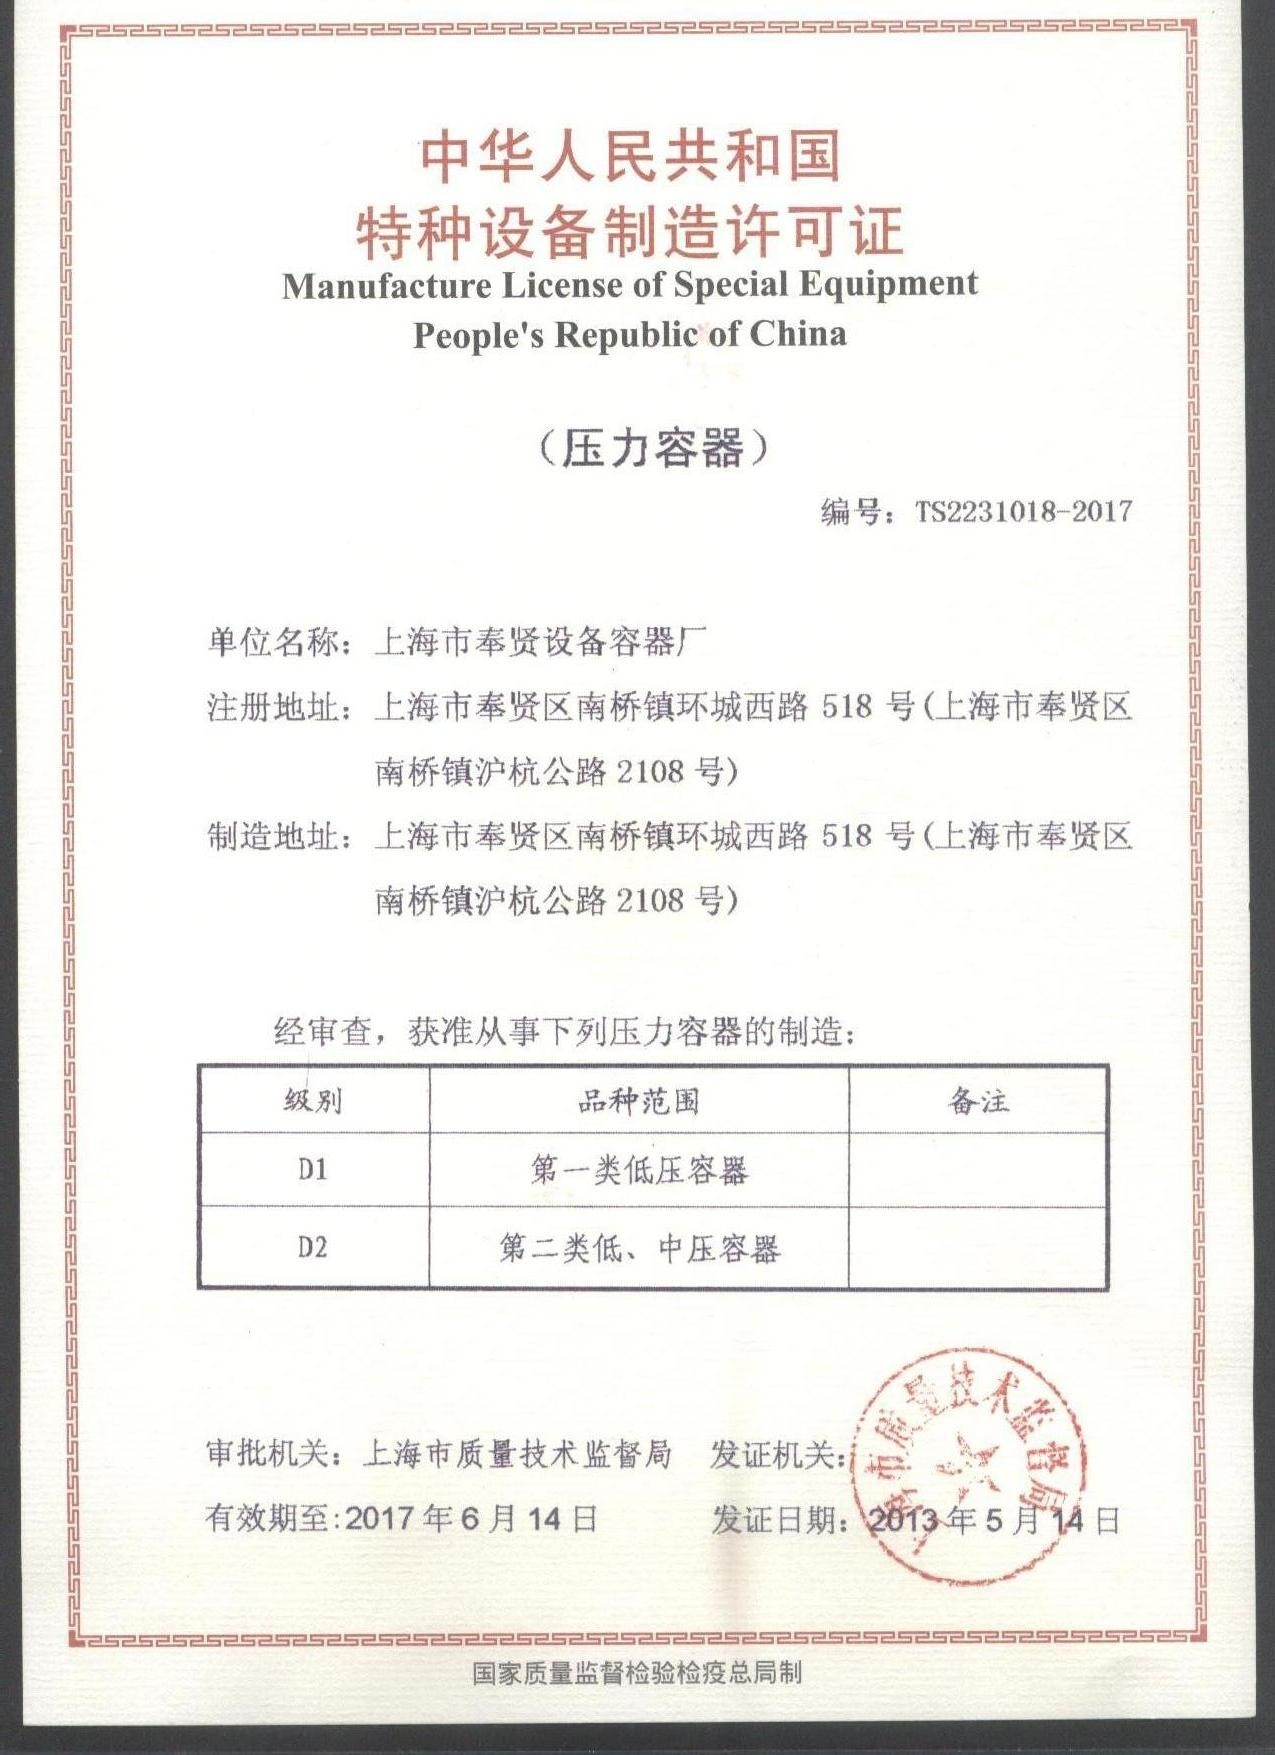 Shanghai Fengxian Equipment Vessel Factory Certifications